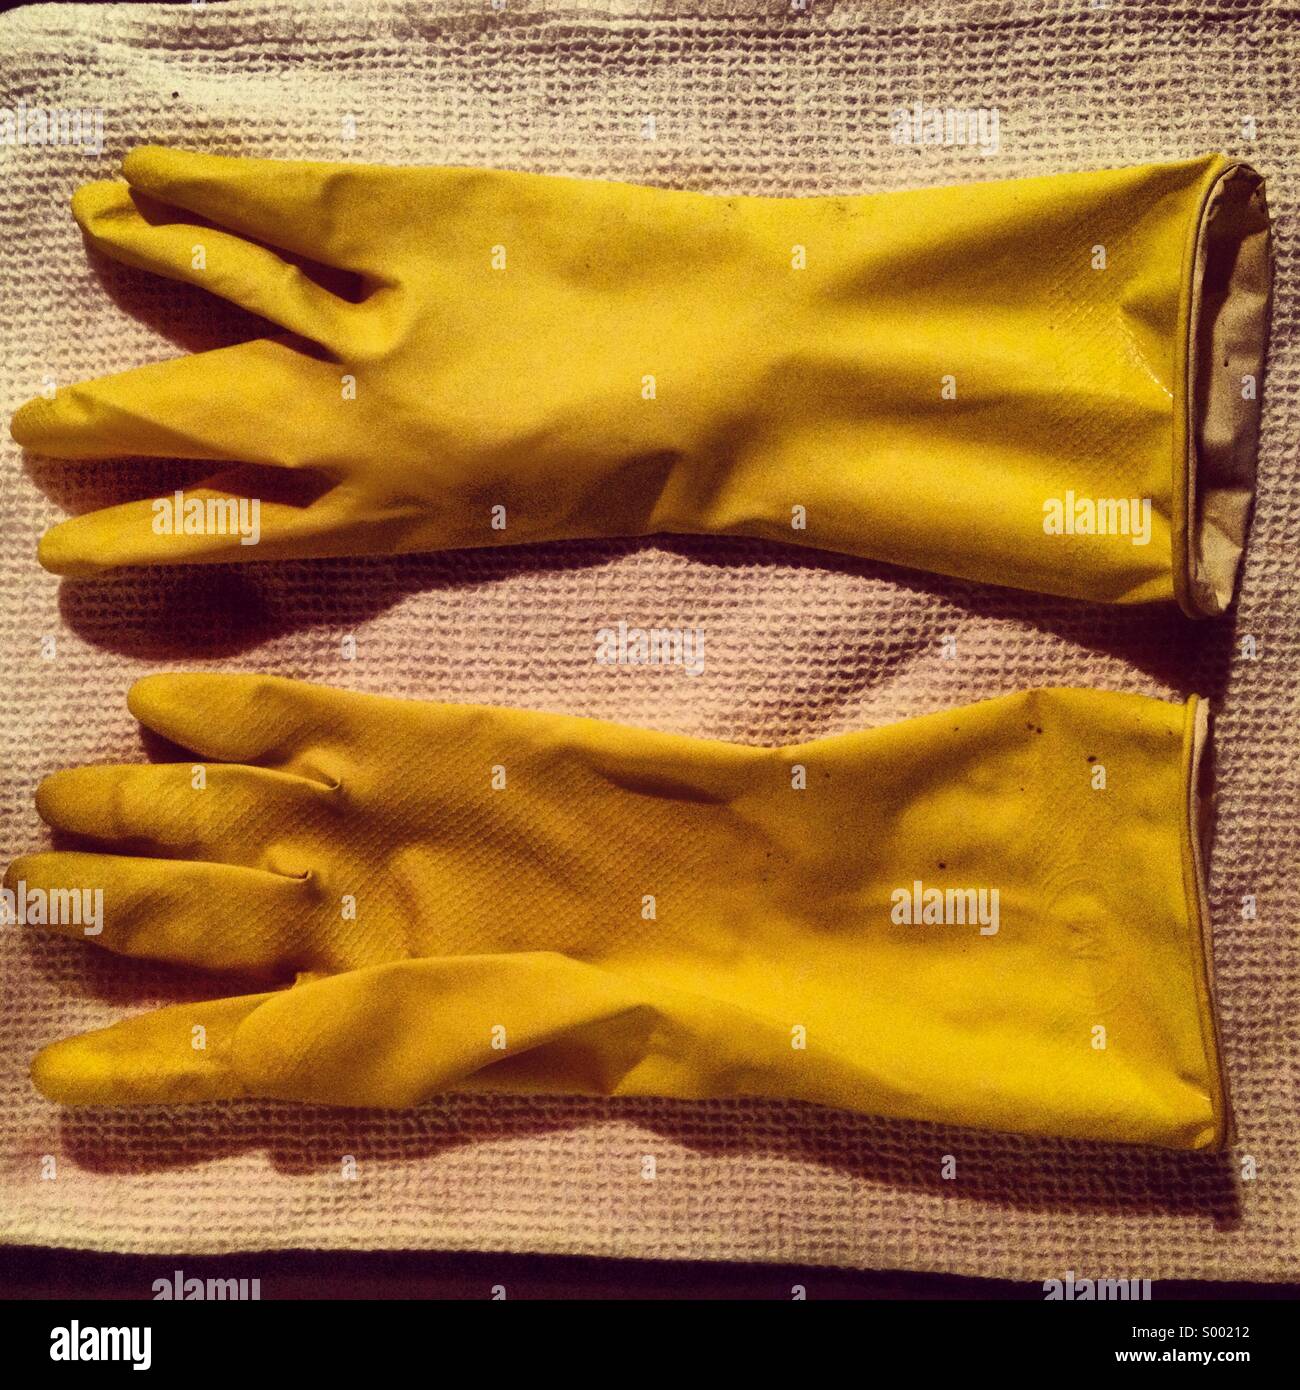 Dish washing rubber gloves Stock Photo